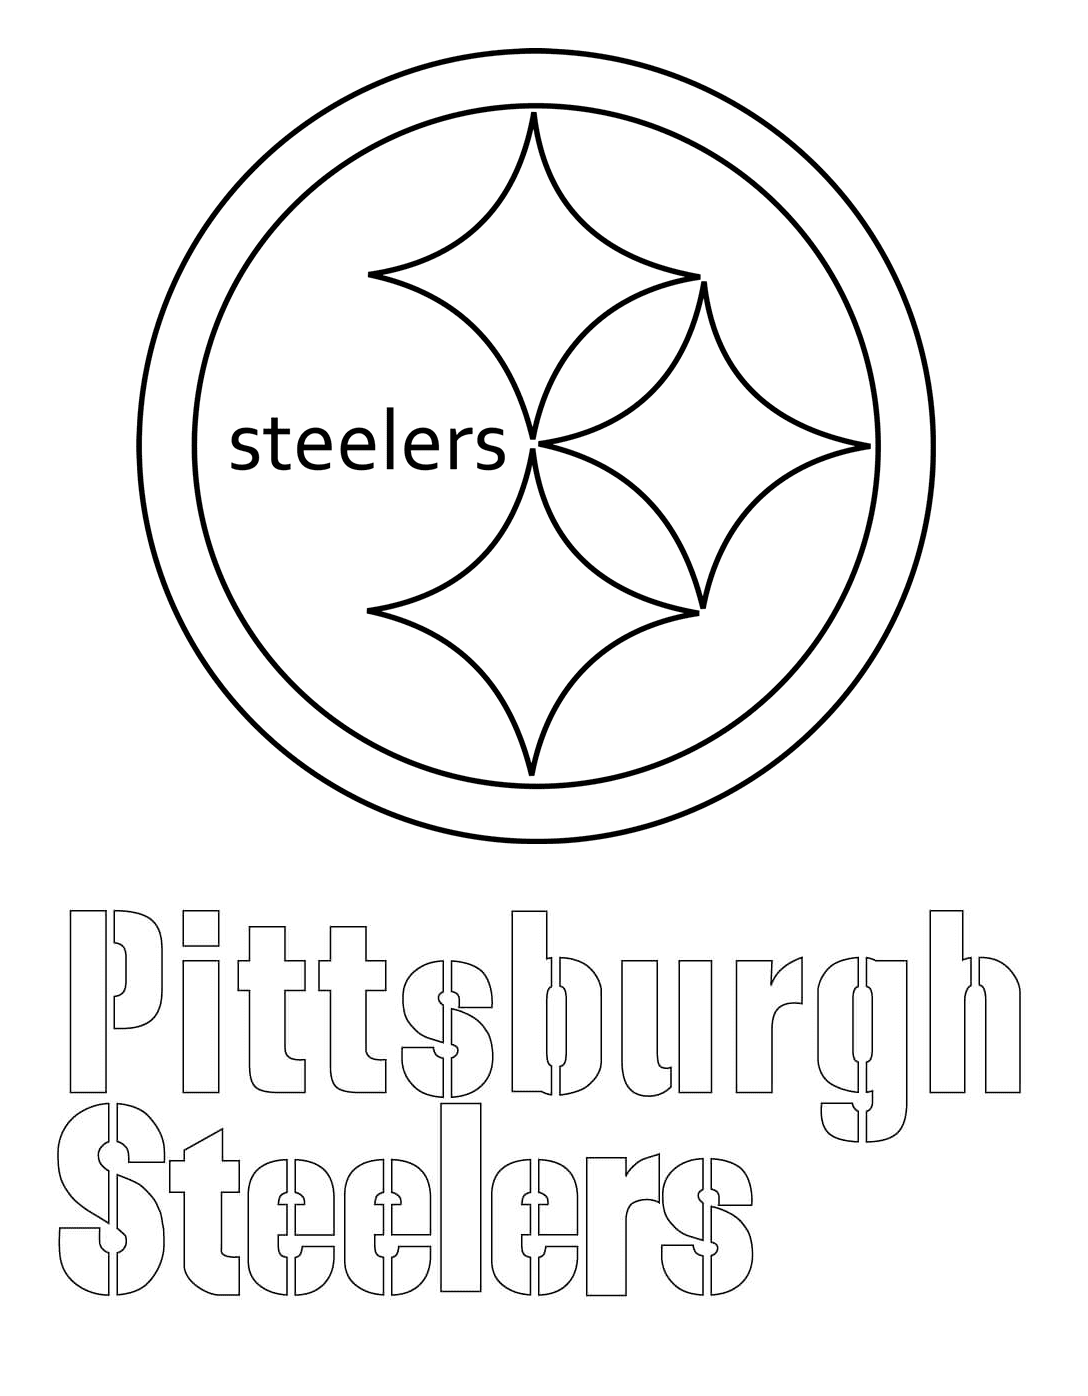 Логотип Питтсбург Стилерс из НФЛ